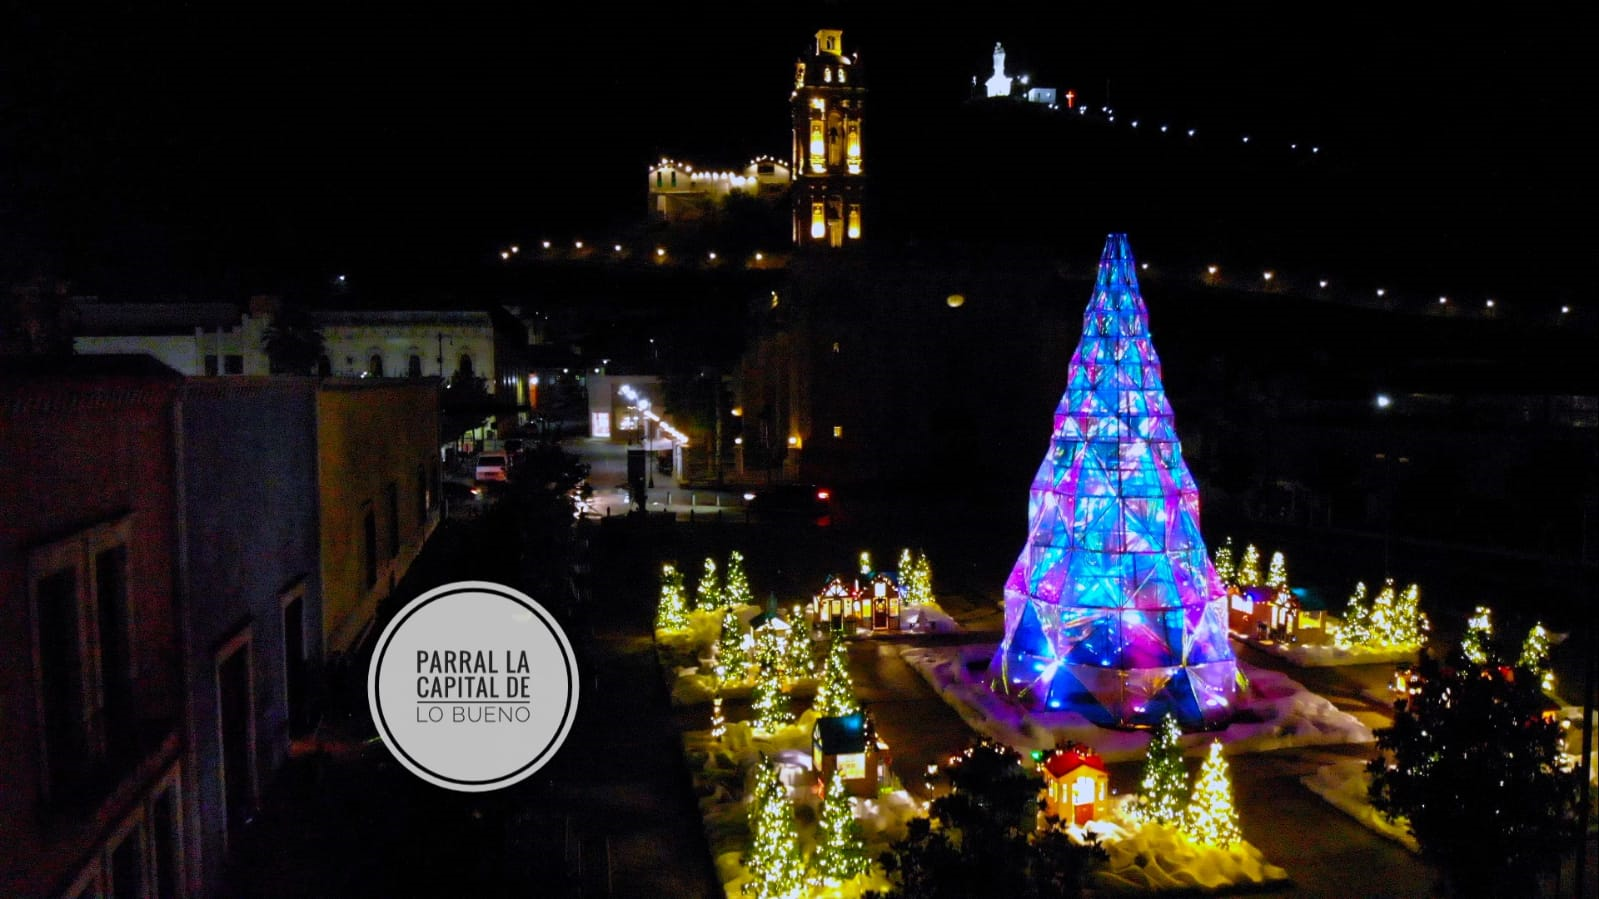 Monumental árbol navideño inspirado para que cada familia coincida en un mágico lugar